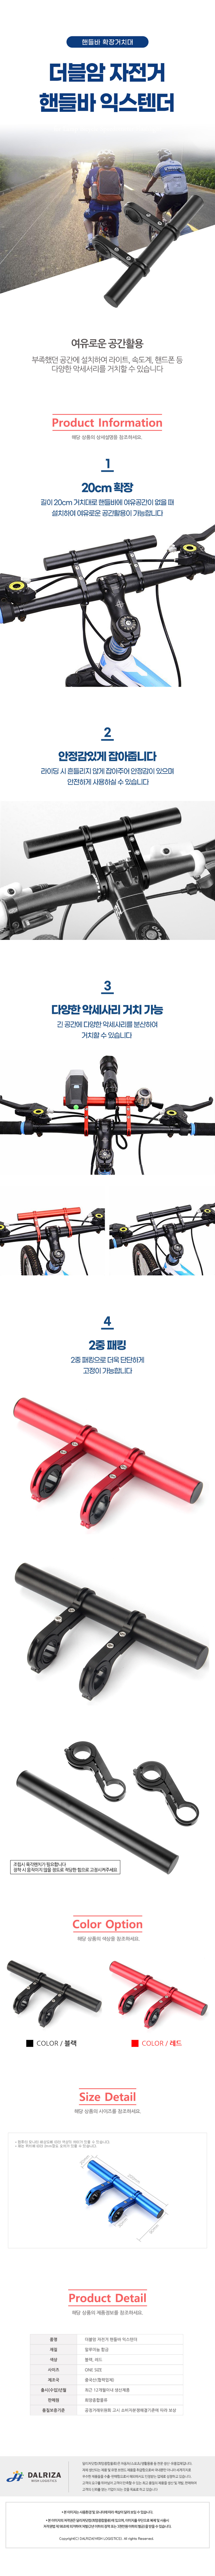 double_arm_bike_handle_bar_extender_detail.jpg